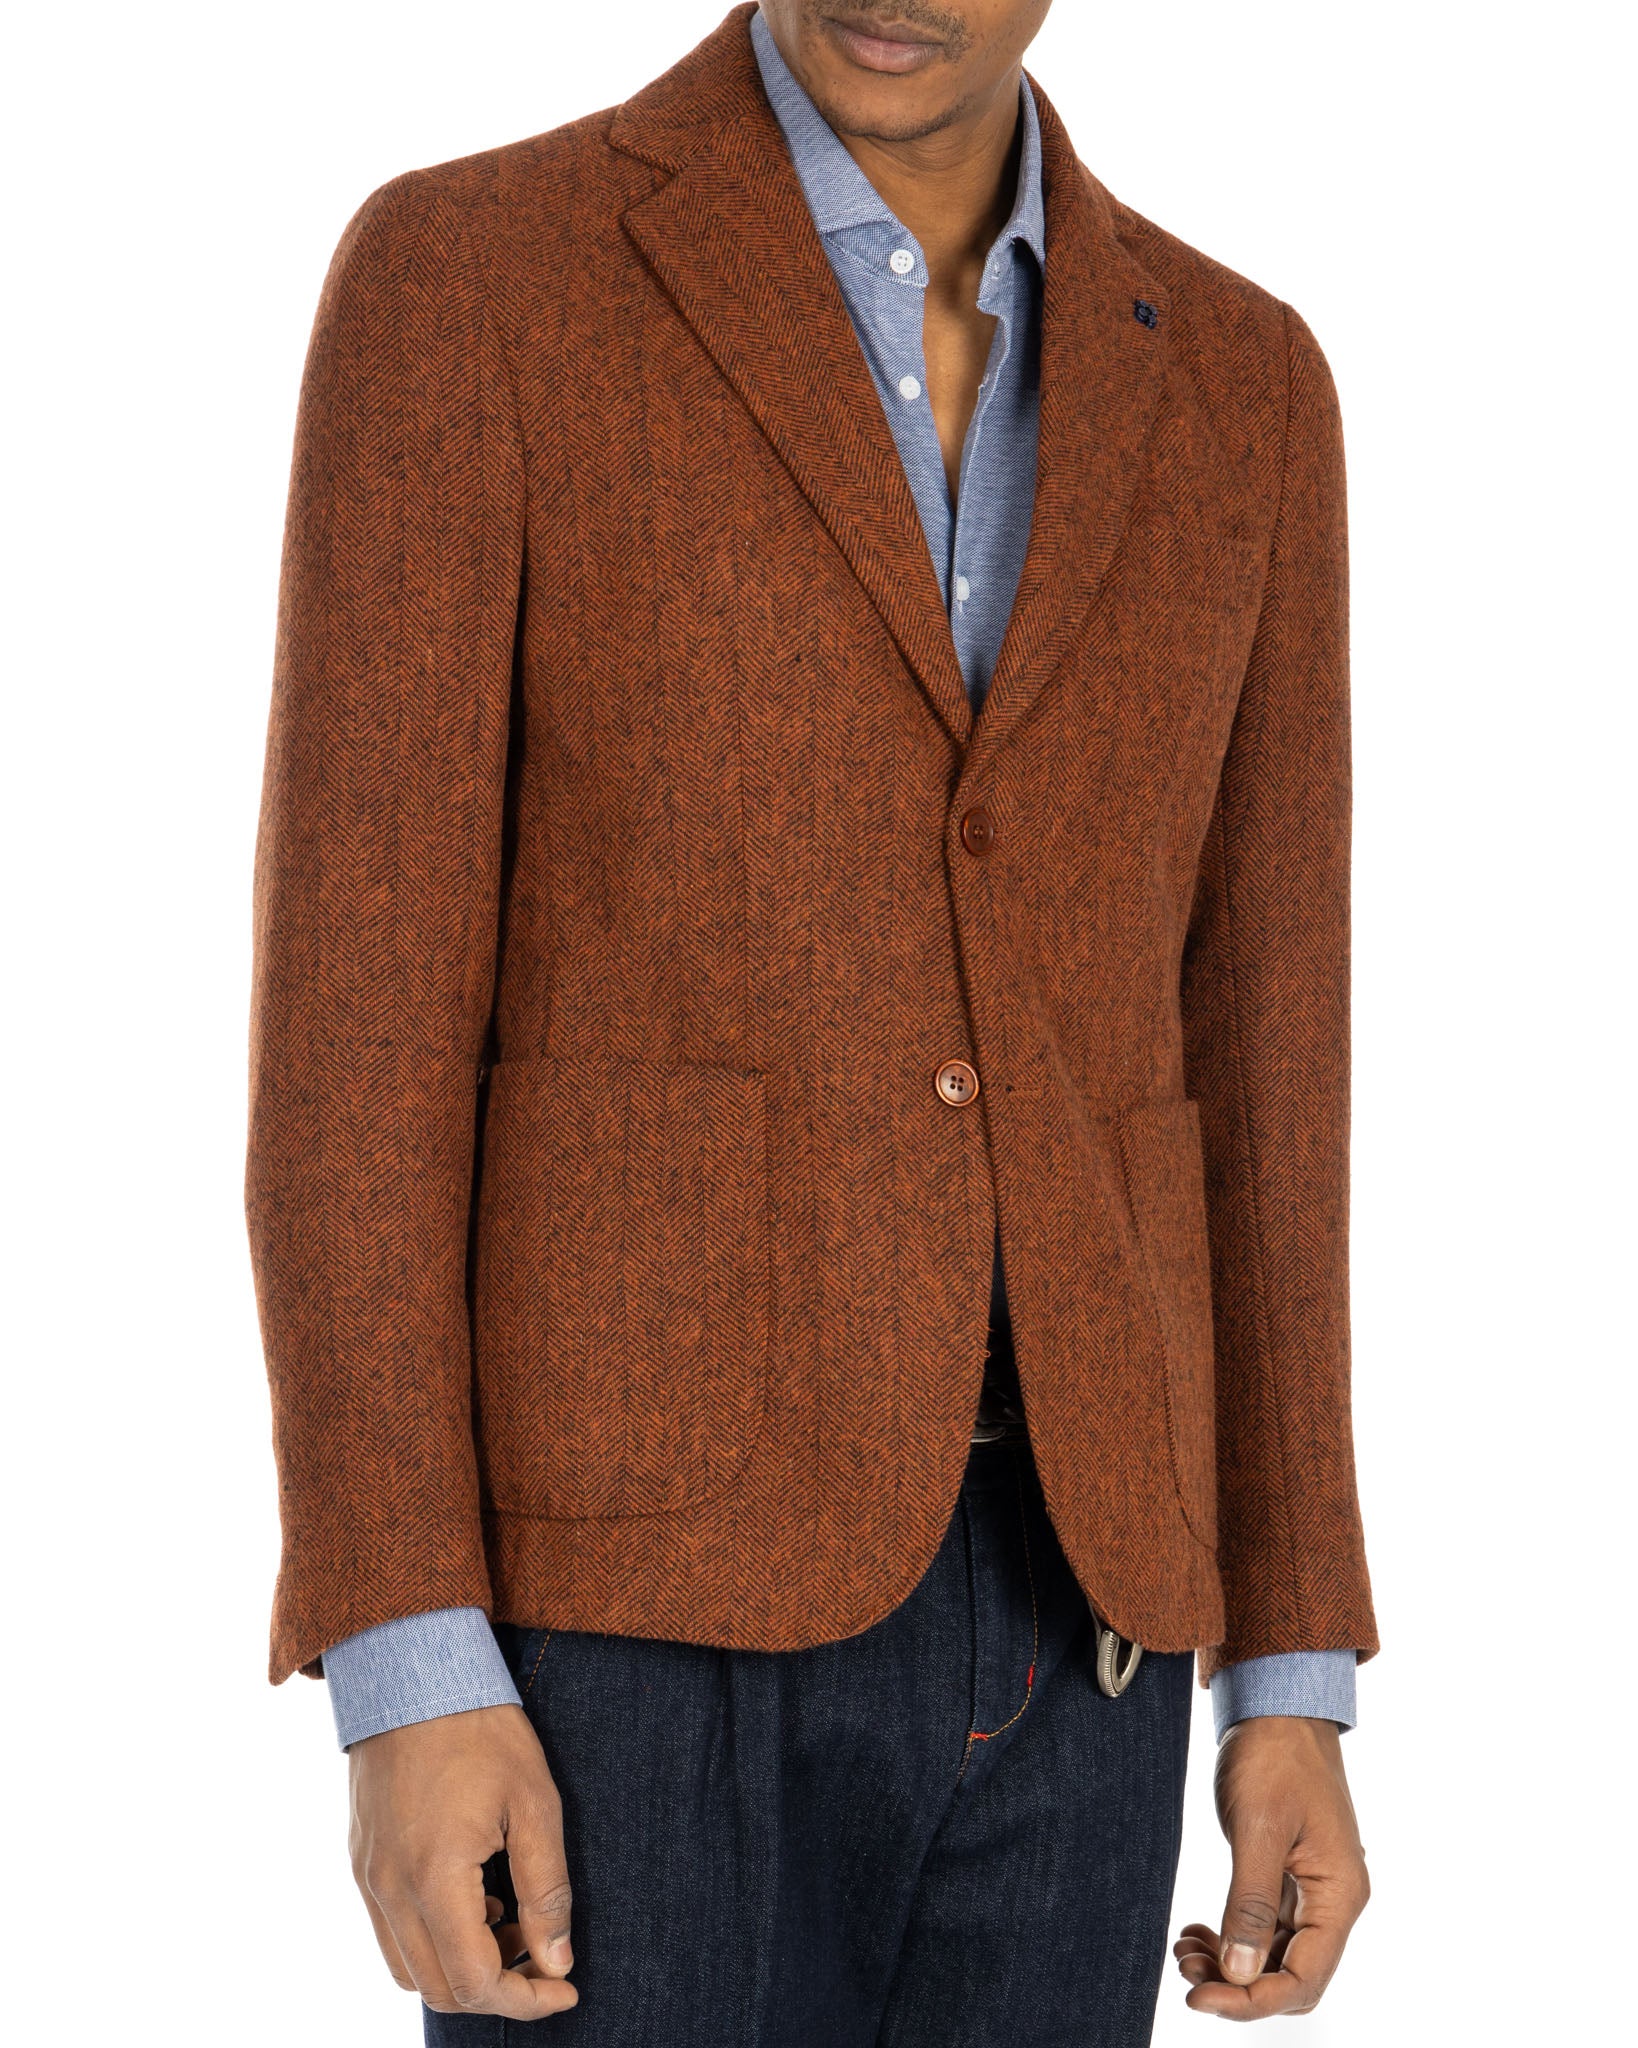 Belluno - orange herringbone weave jacket